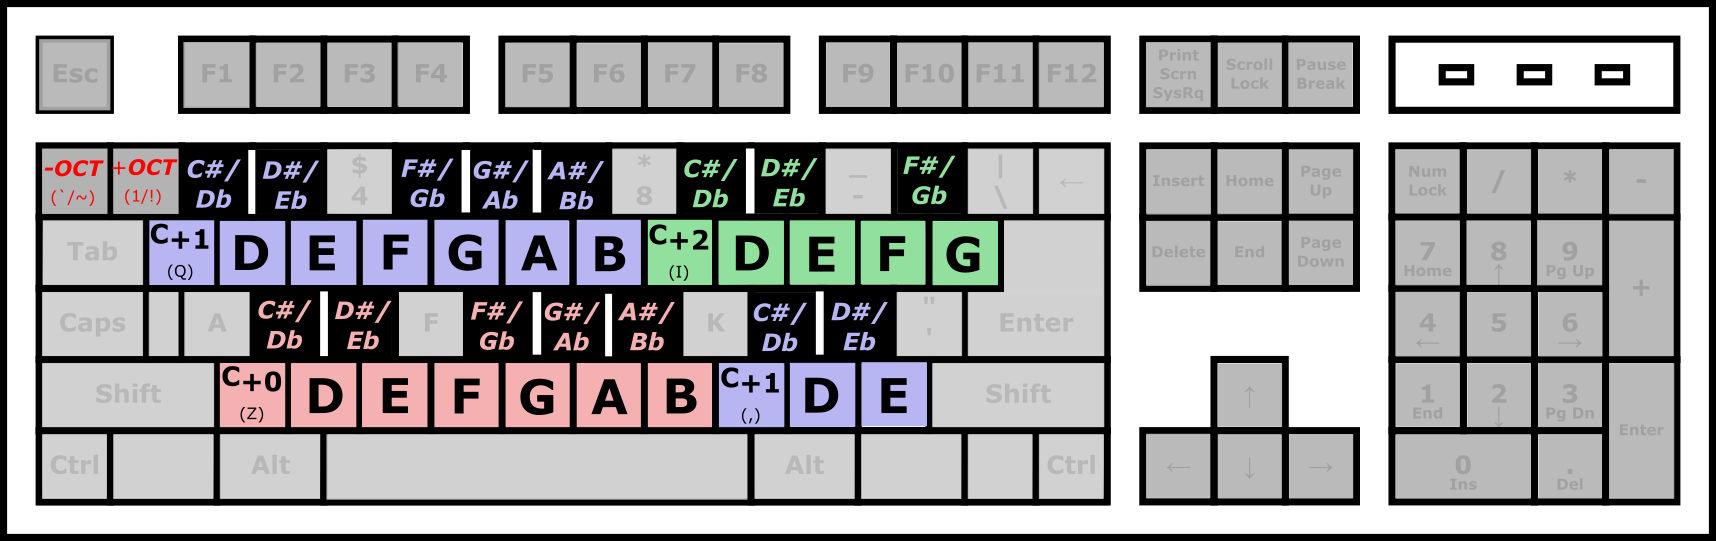 QWERTY Keyboard with VCV MIDI Keyboard overlaid